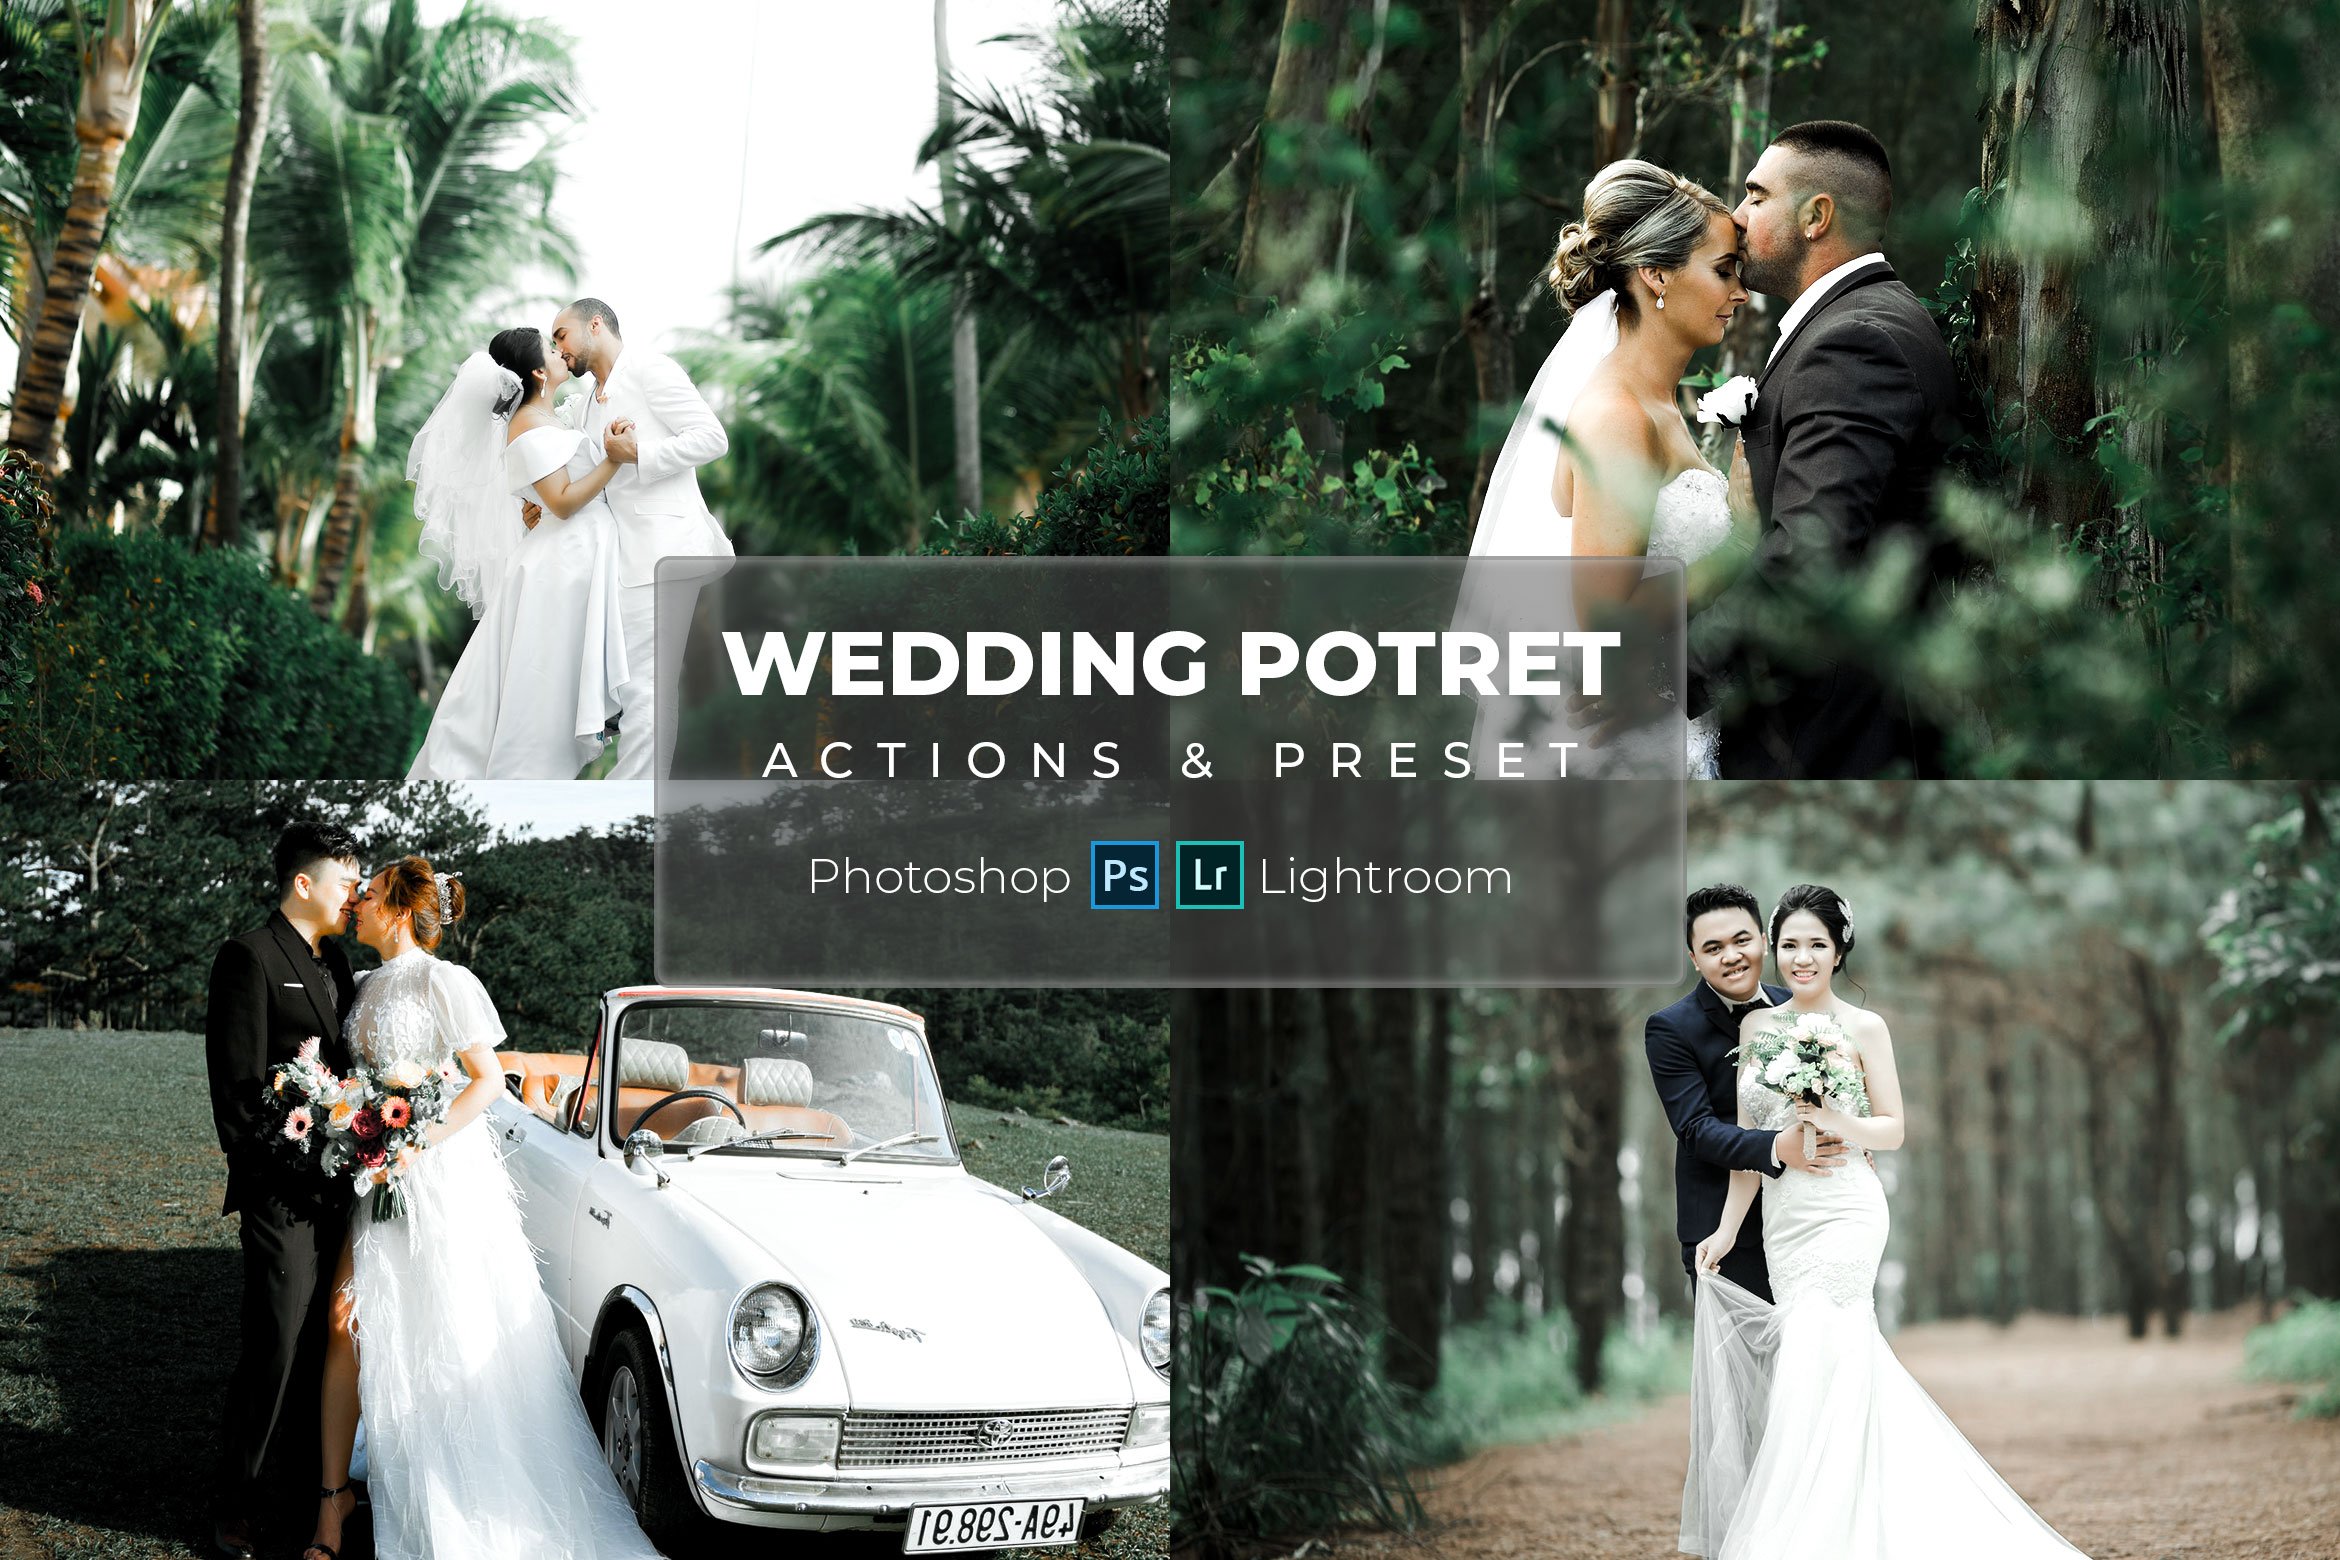 Presets & Actions - Wedding Potretcover image.